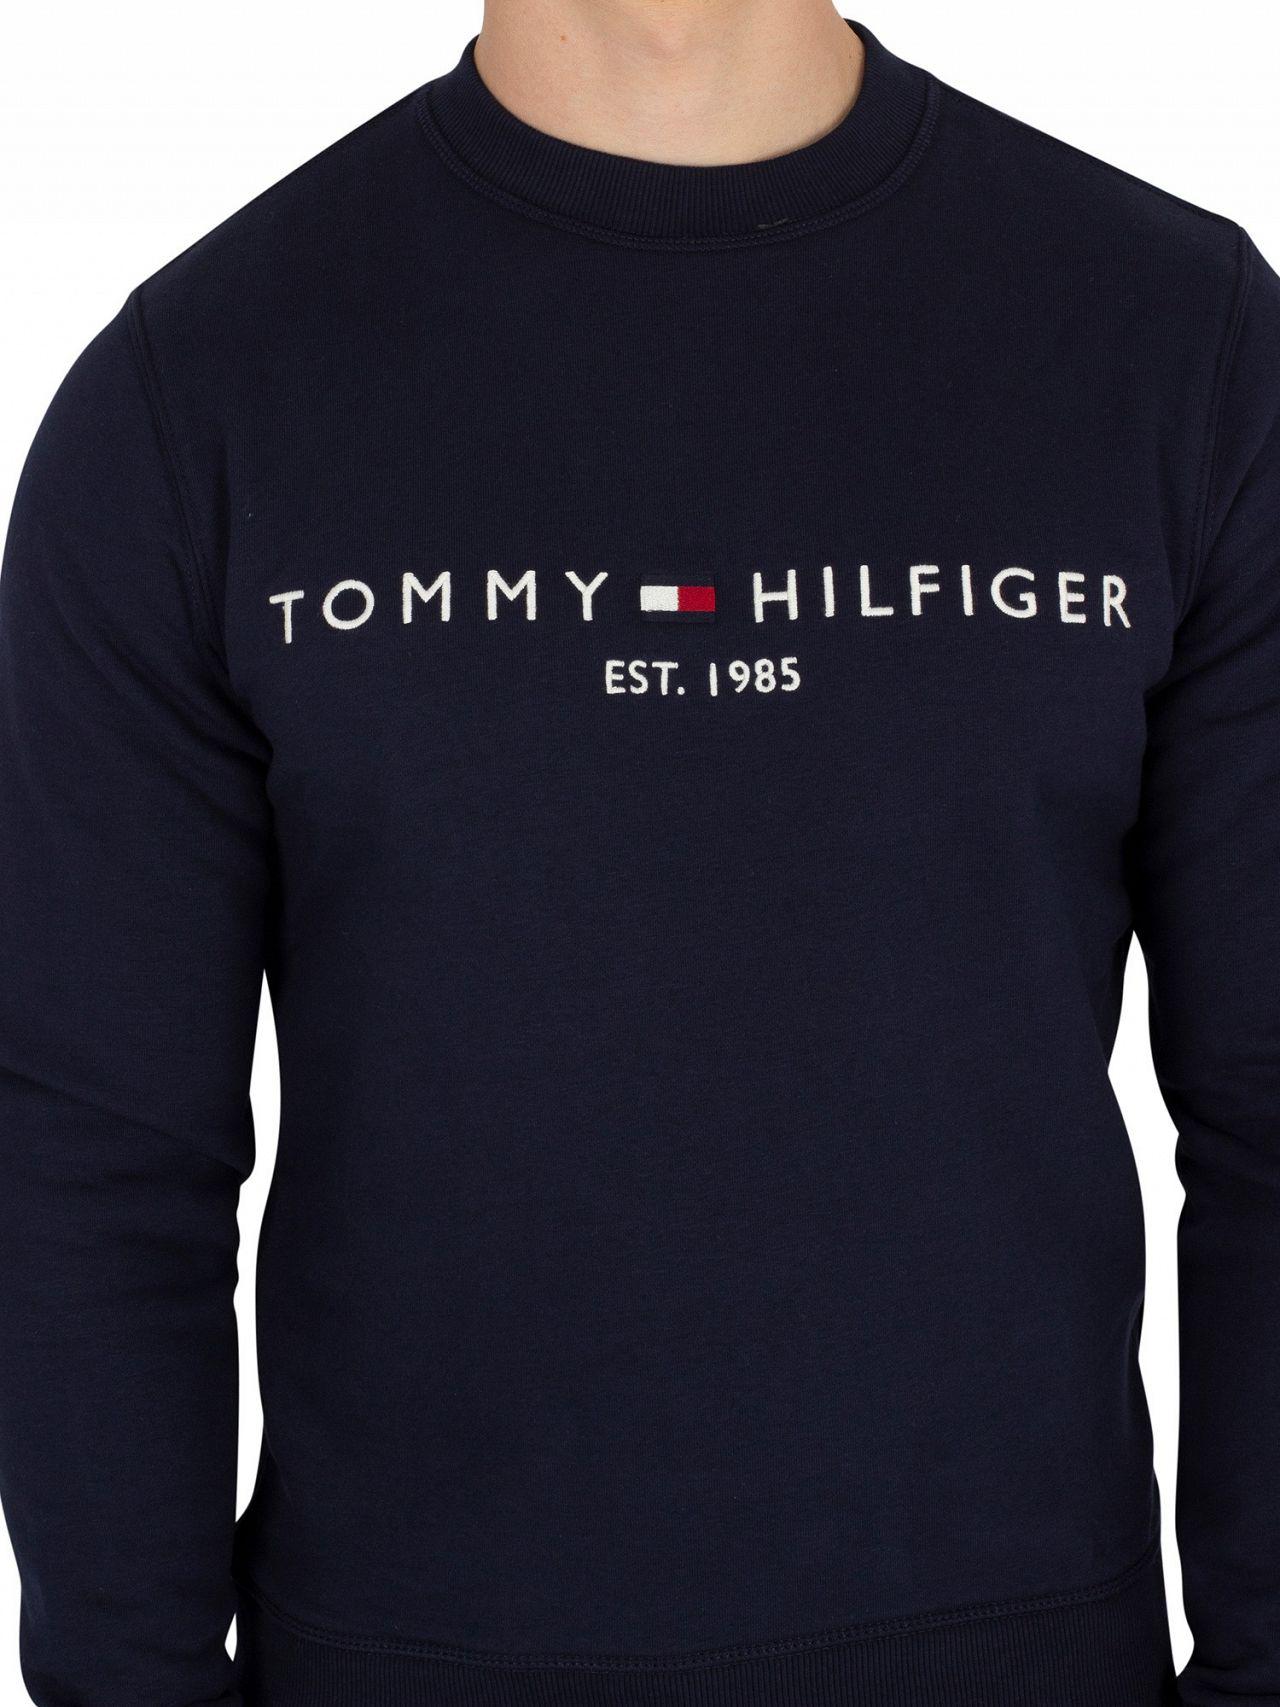 Tommy Hilfiger 1985 Sweatshirt Online Sale, UP TO 50% OFF